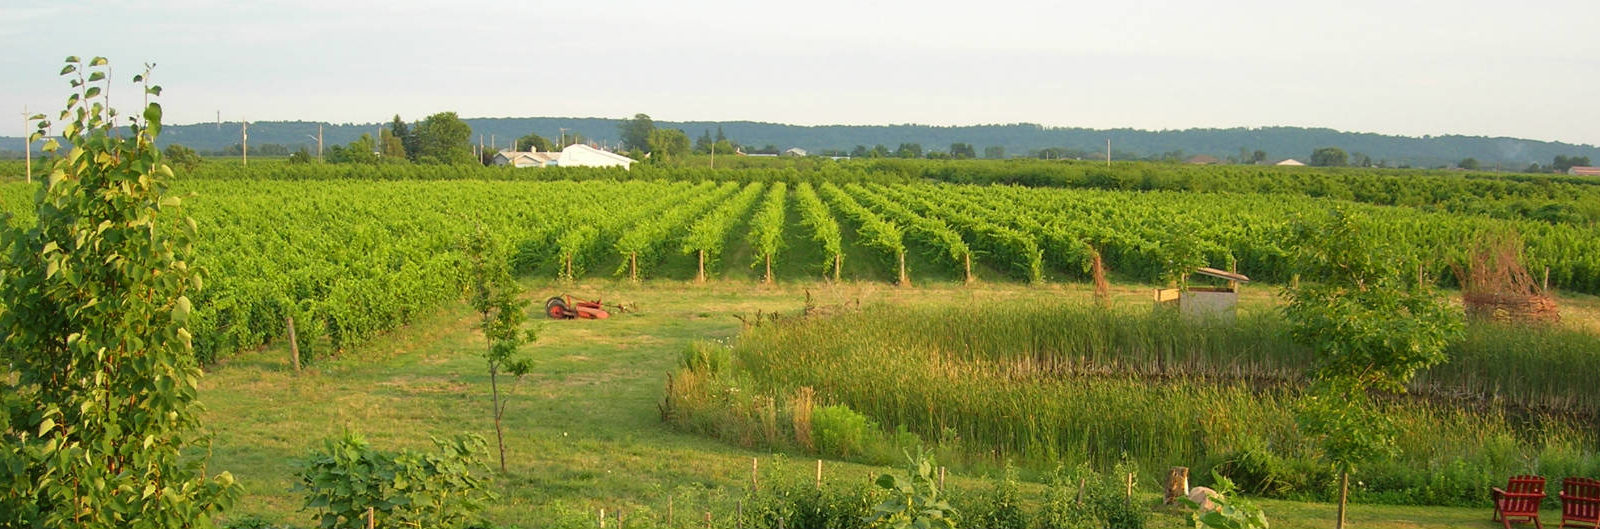 Frogpond Farm Organic Winery